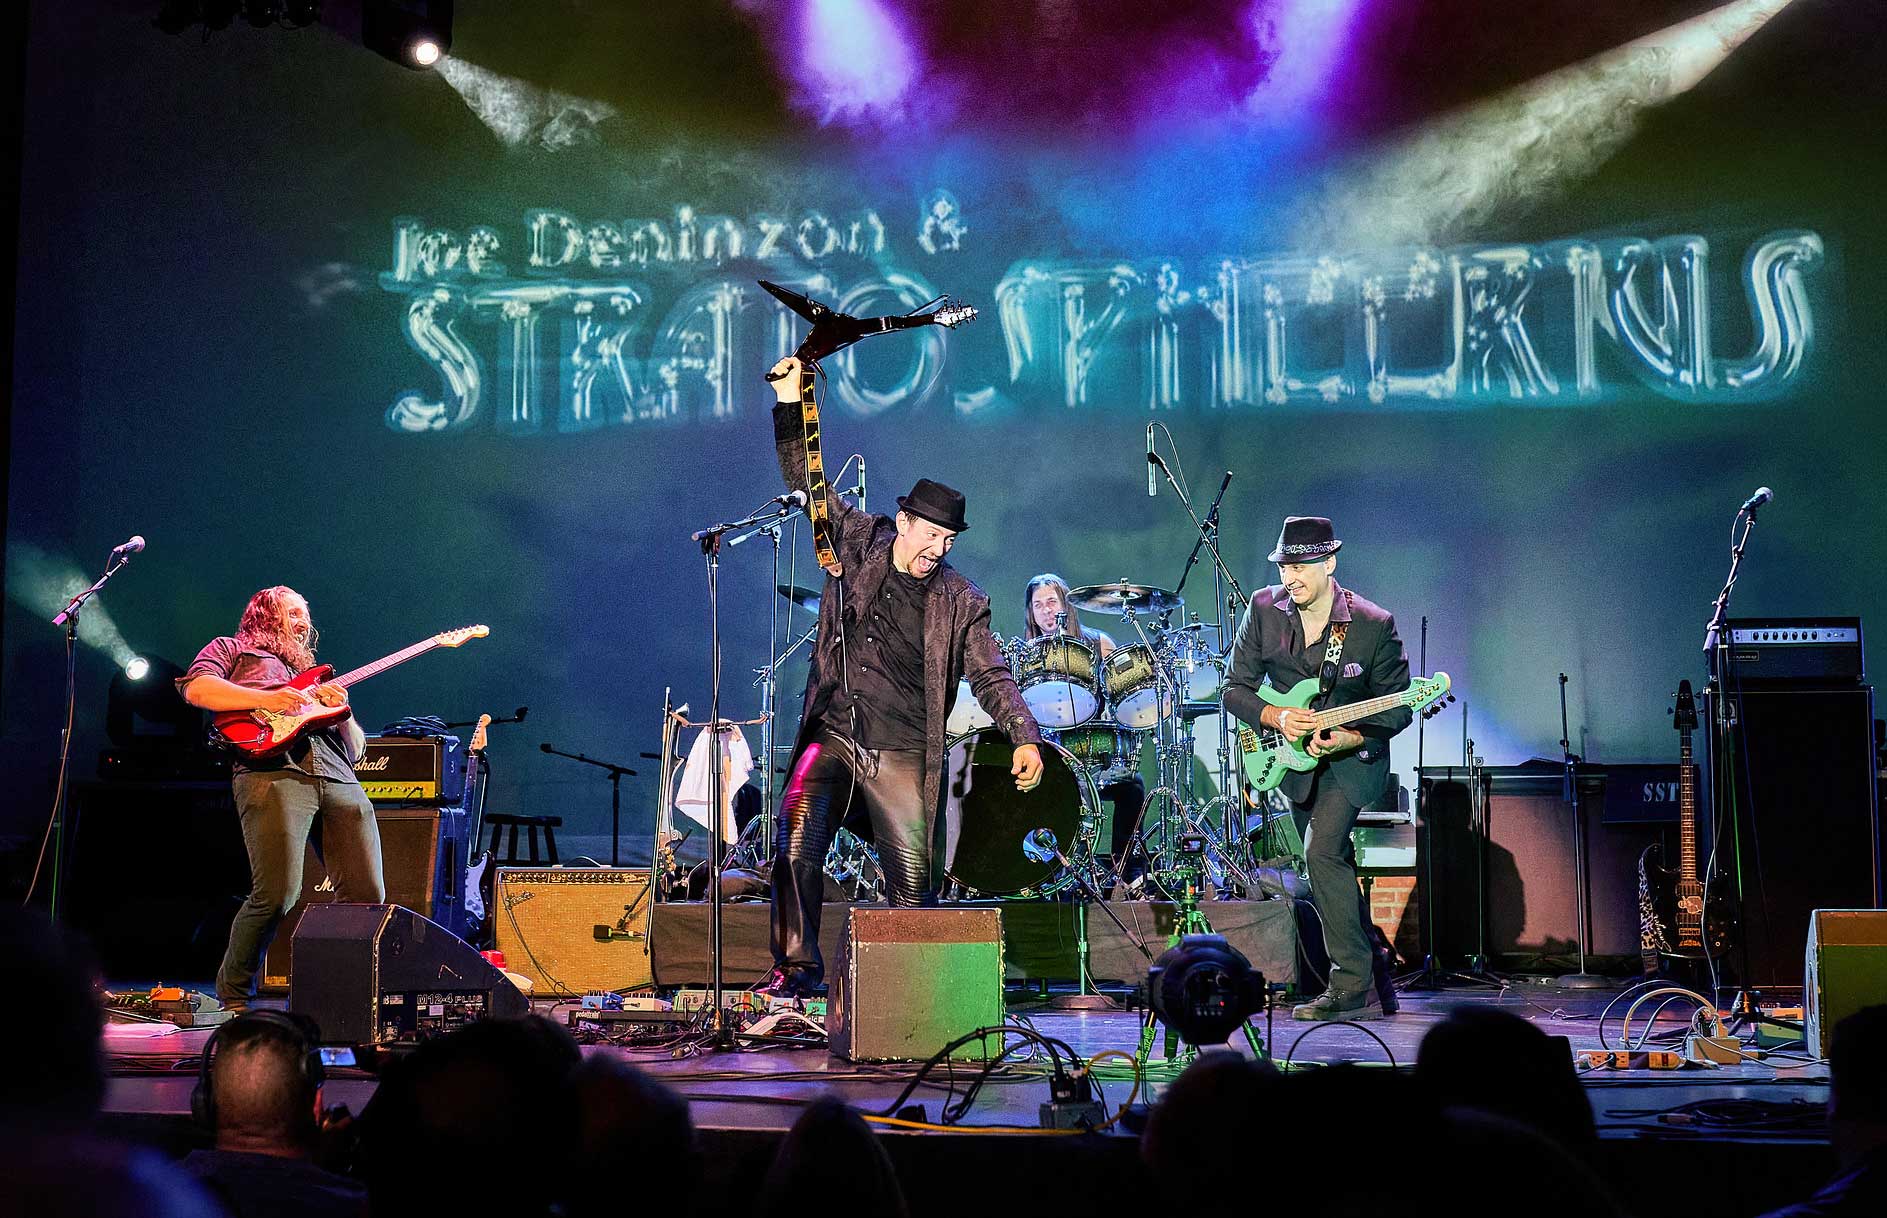 Joe Deninzon also is the lead singer and violinist for the progressive rock band Stratospheerius.